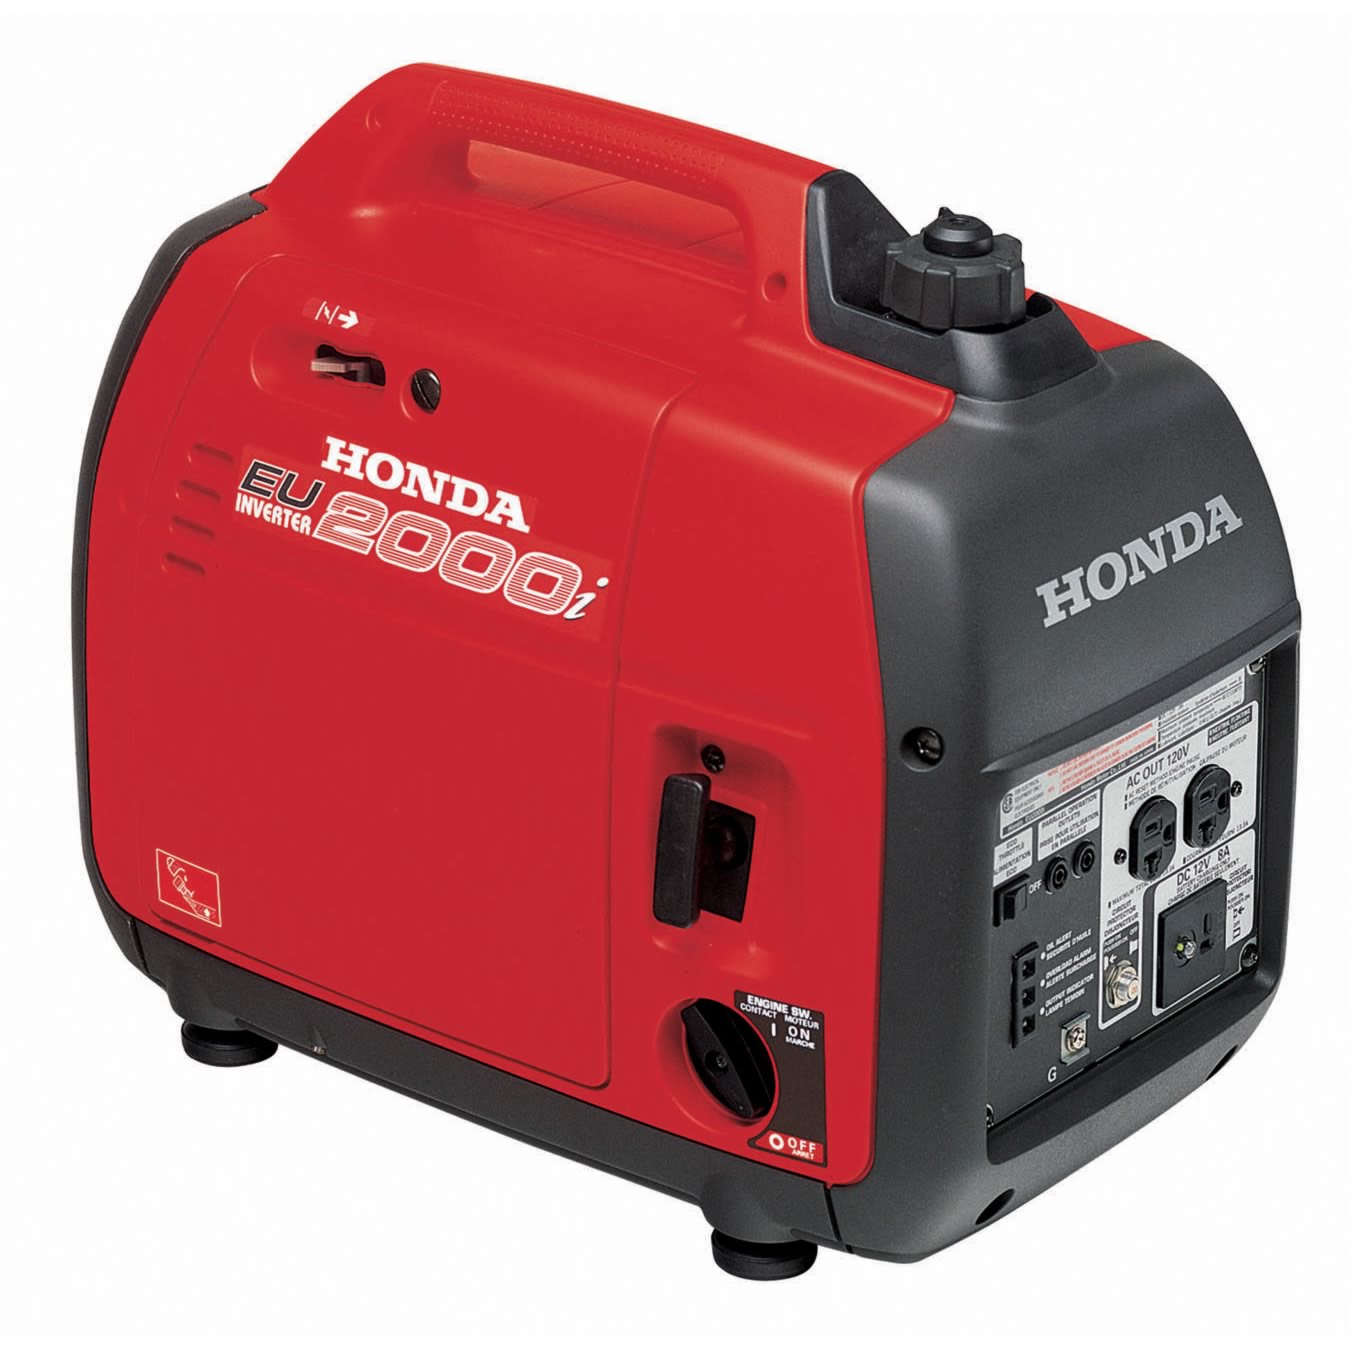 Honda Generator Troubleshooting Tips